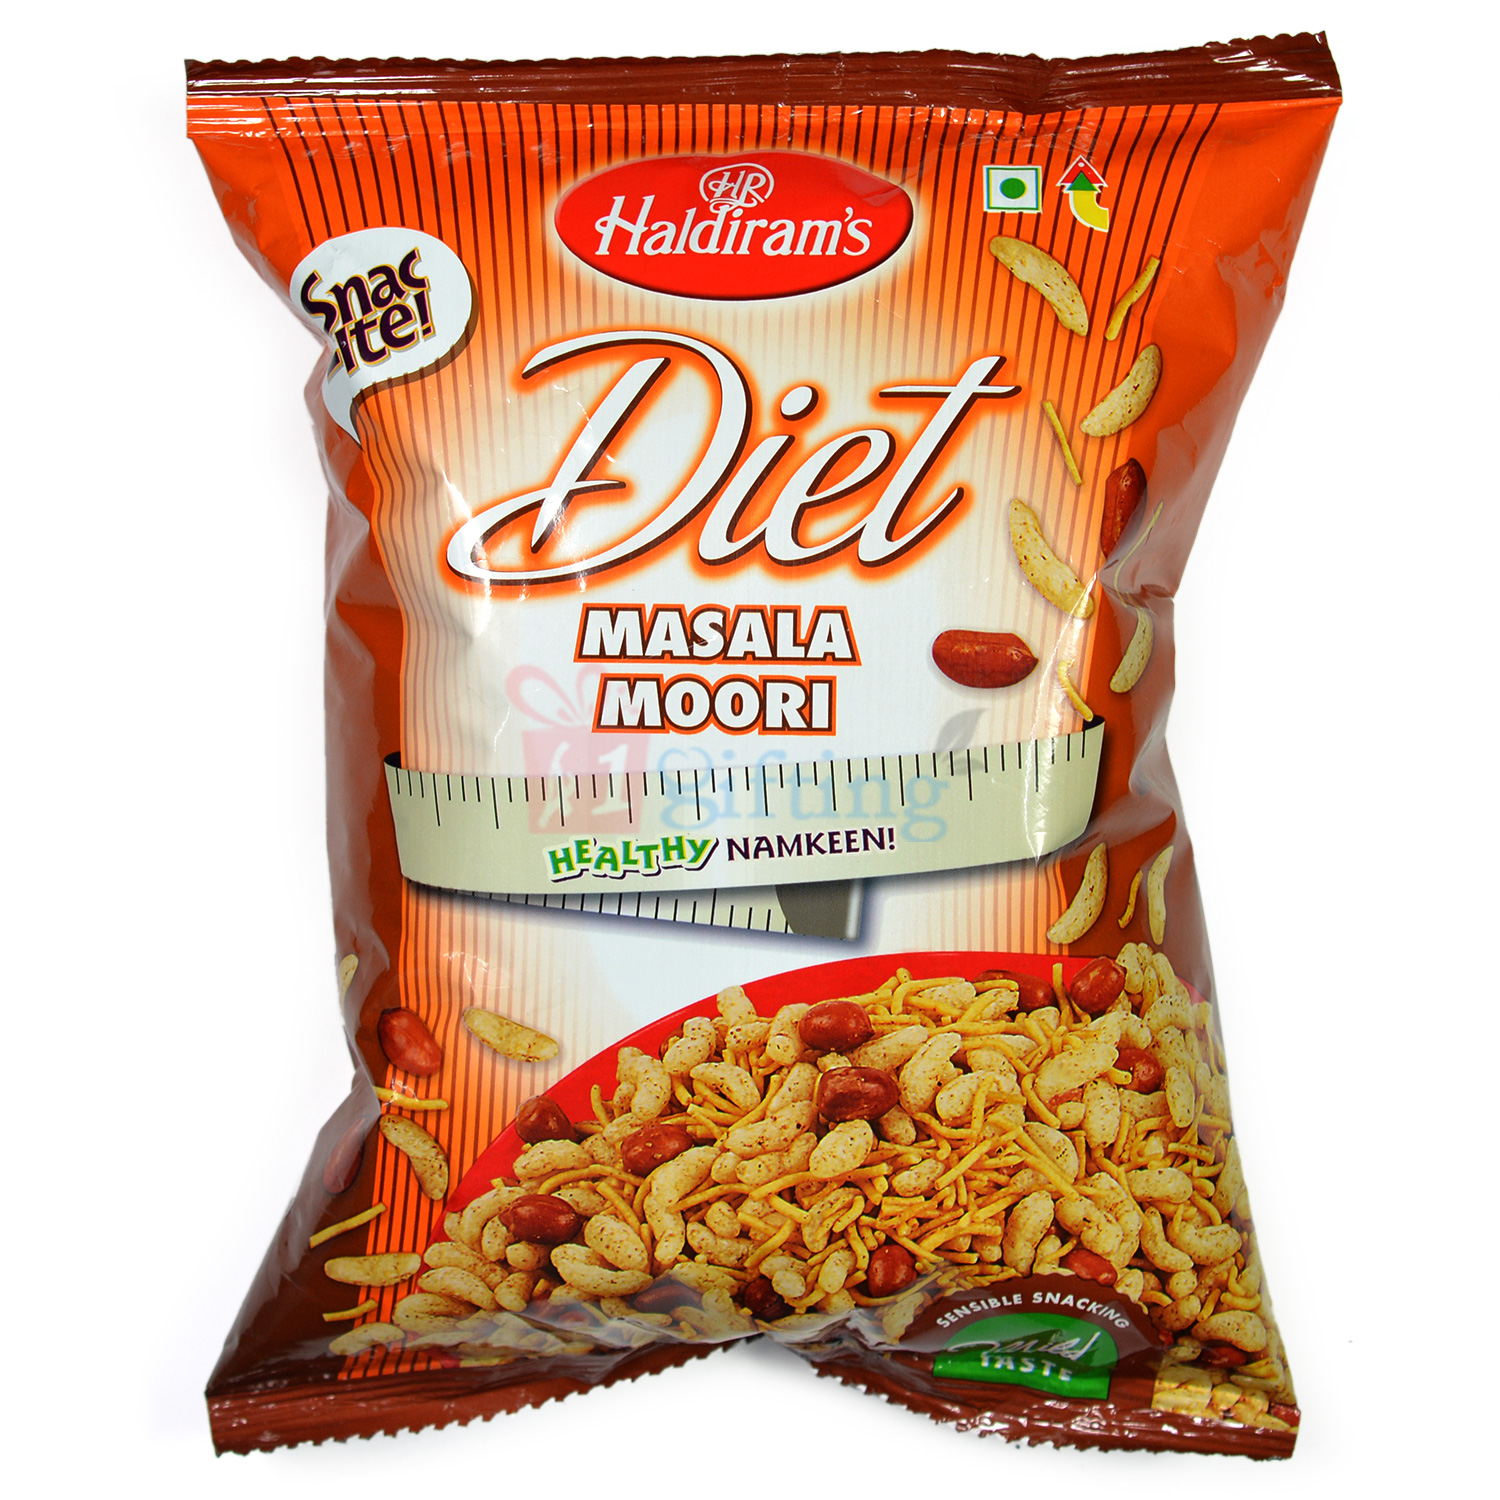 Diet Masala Moori Healthy Namkeen by Haldiram